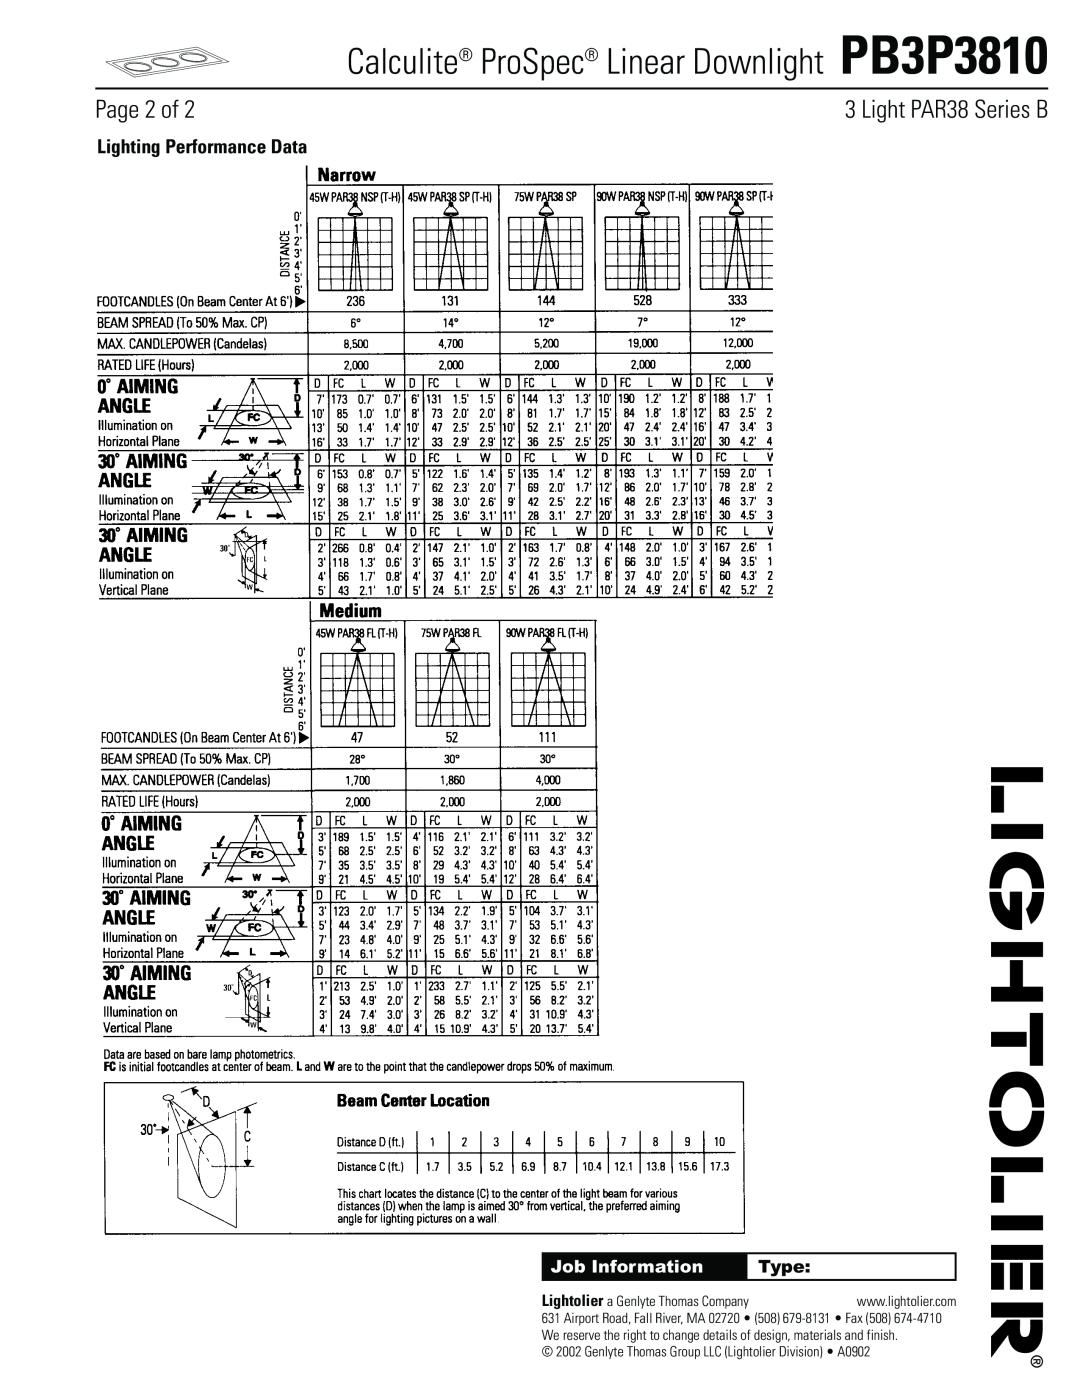 Lightolier Page 2 of 2 PB3P3810, Lighting Performance Data, Type, Calculite ProSpec Linear Downlight PB3P3810, 03/02 